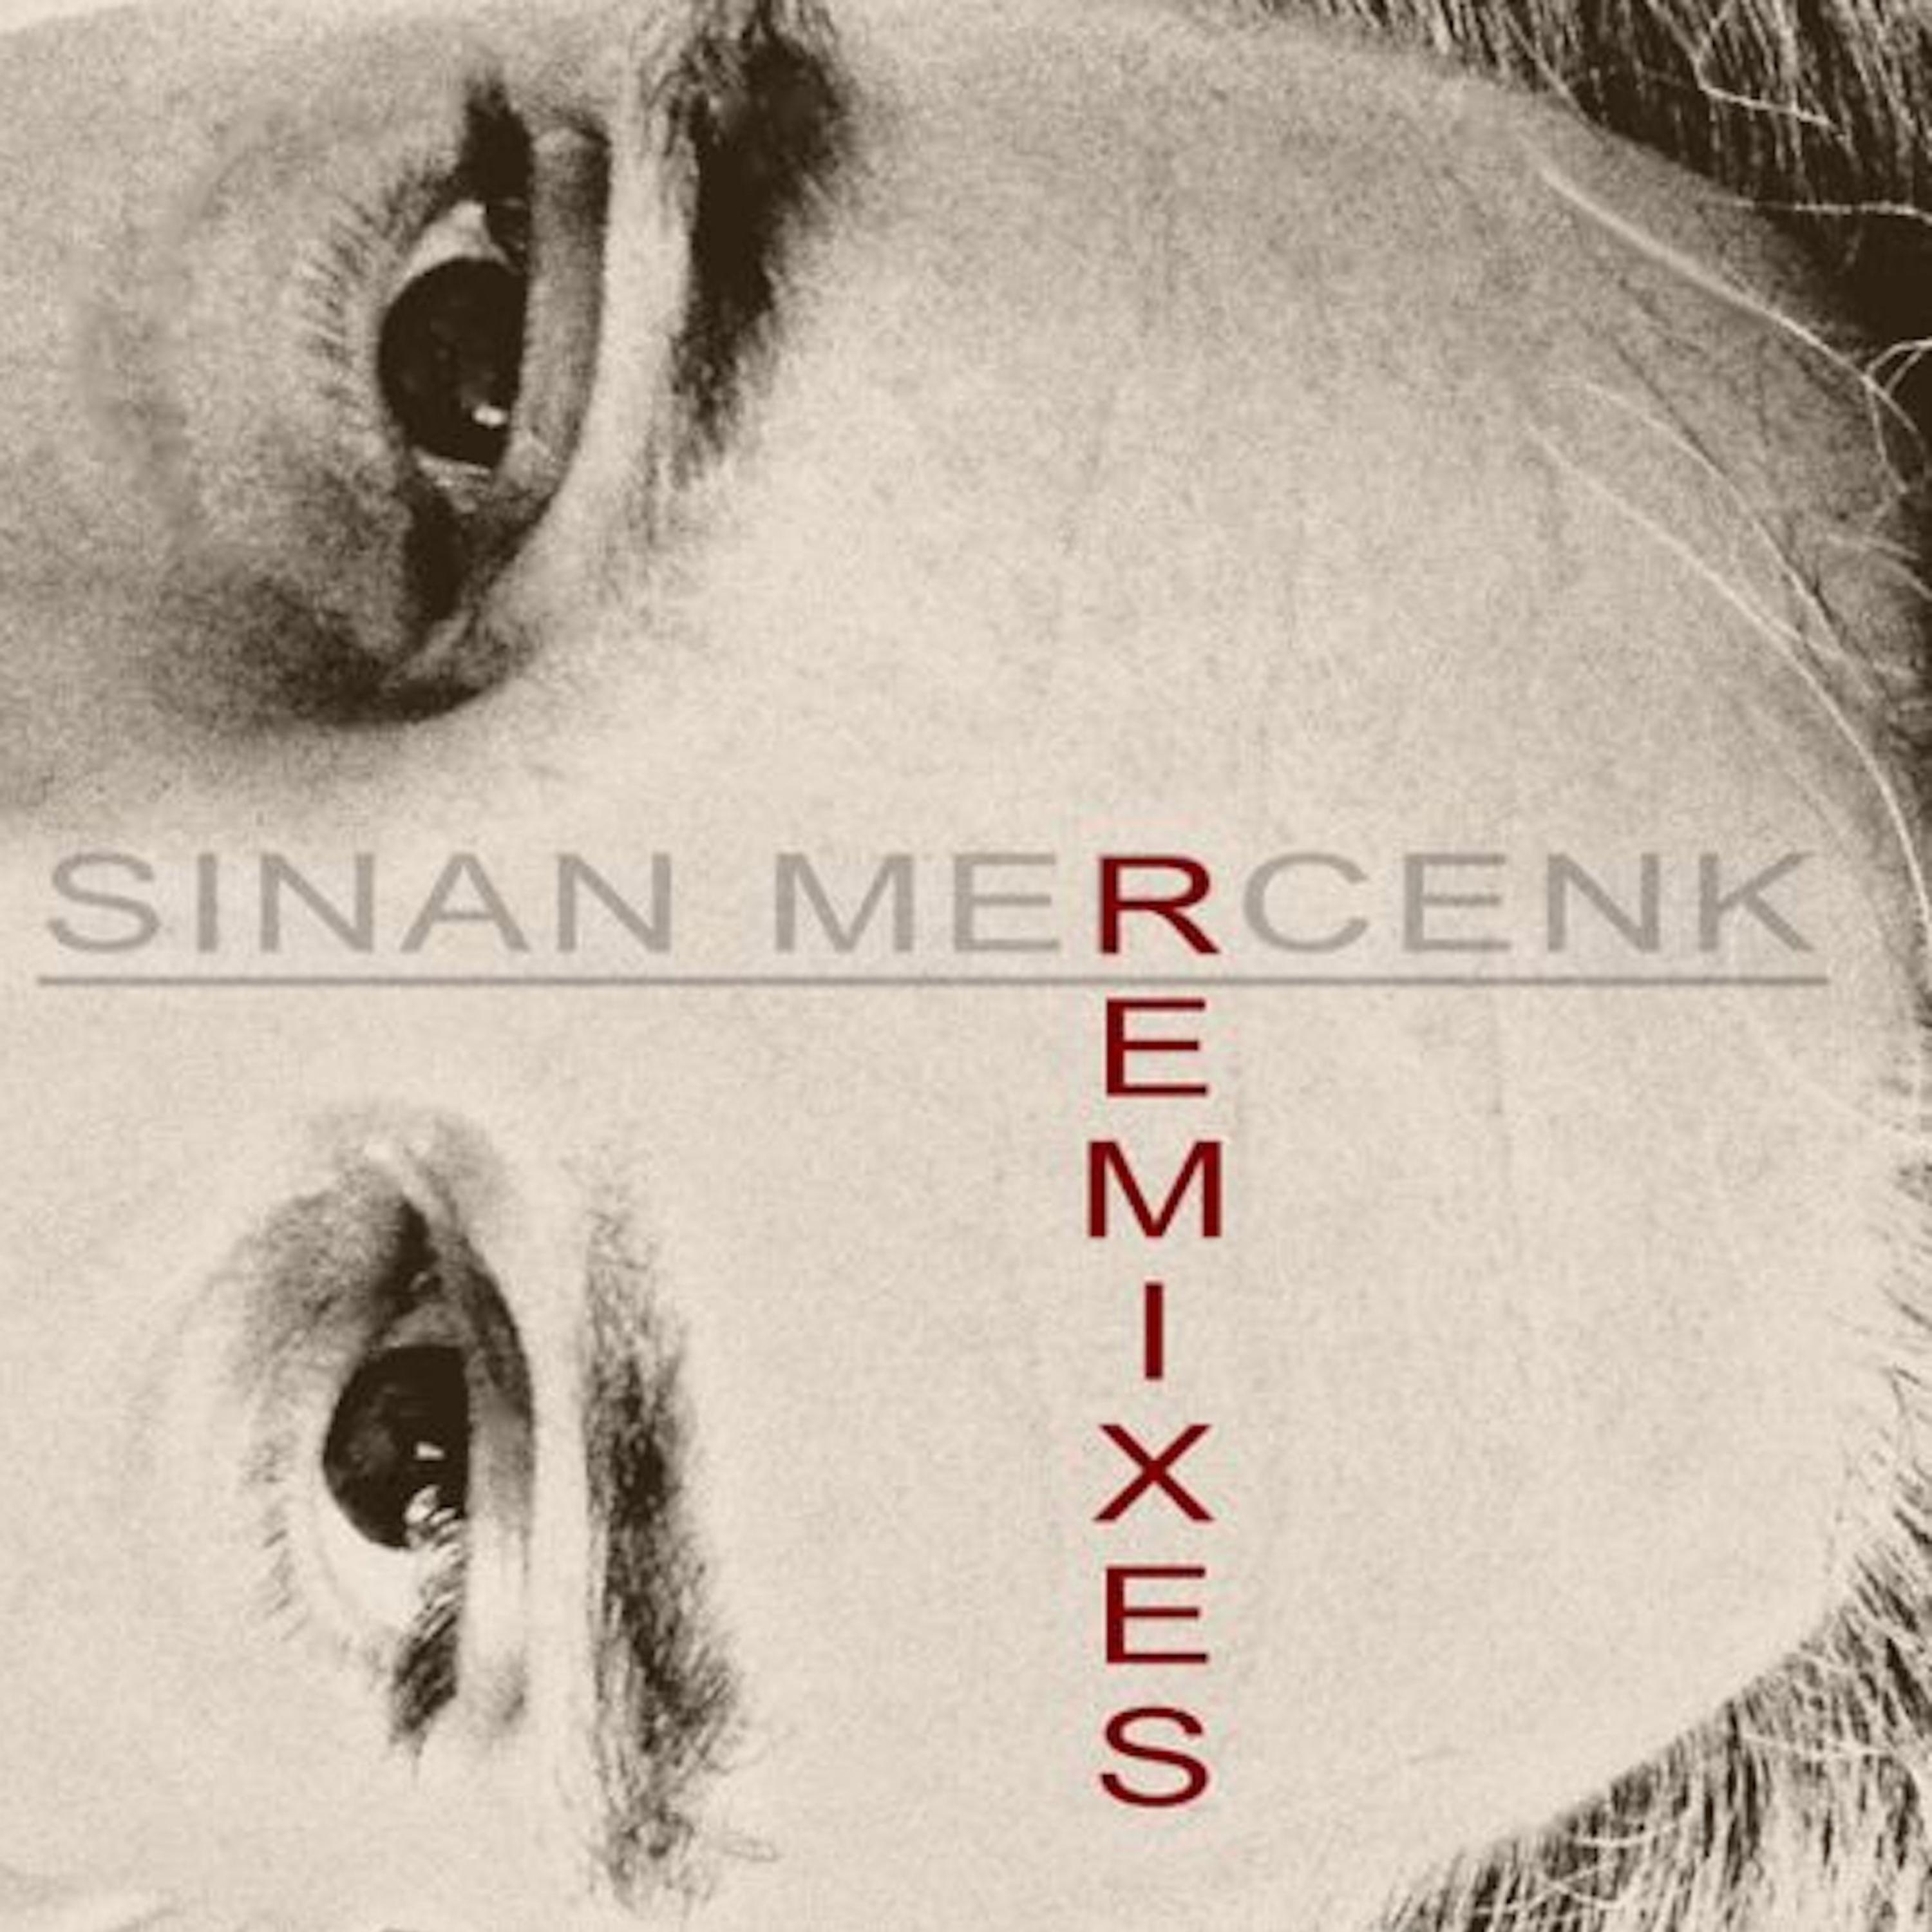 Hypnotized (Sinan Mercenk's Remix Pt. II)